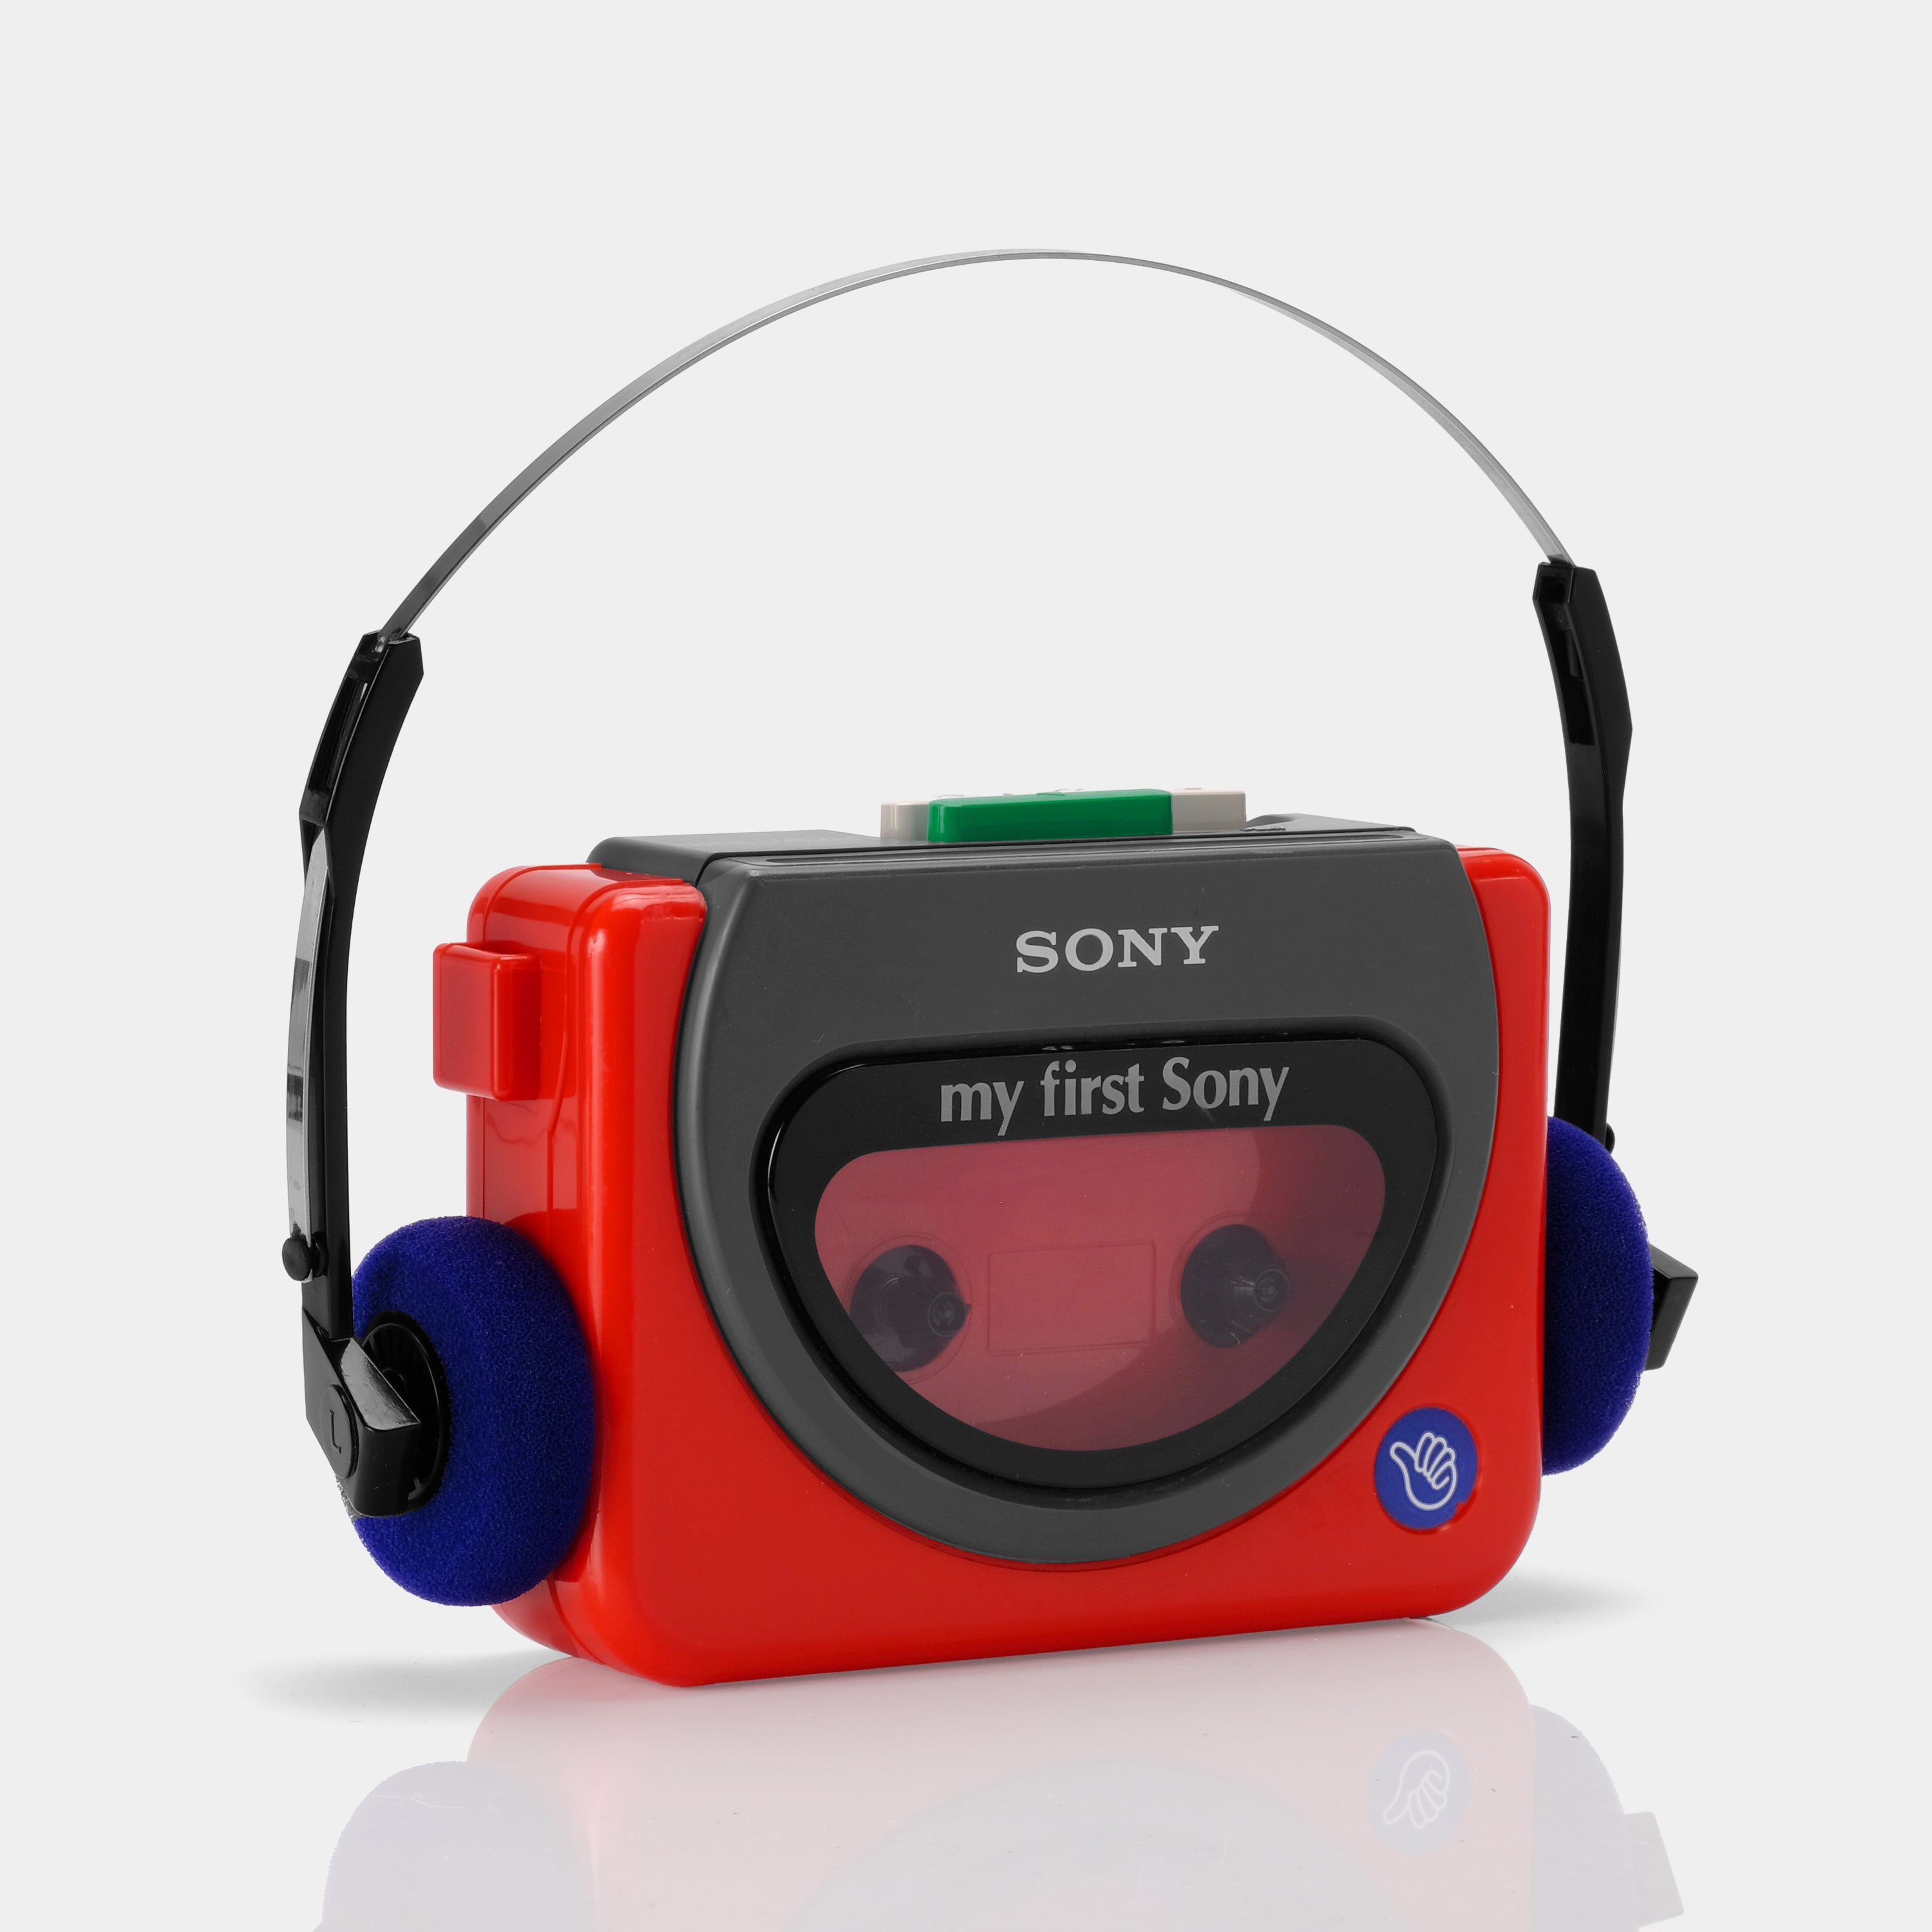 Sony Walkman WM-3000 "My First Sony" Portable Cassette Player (B-Grade)